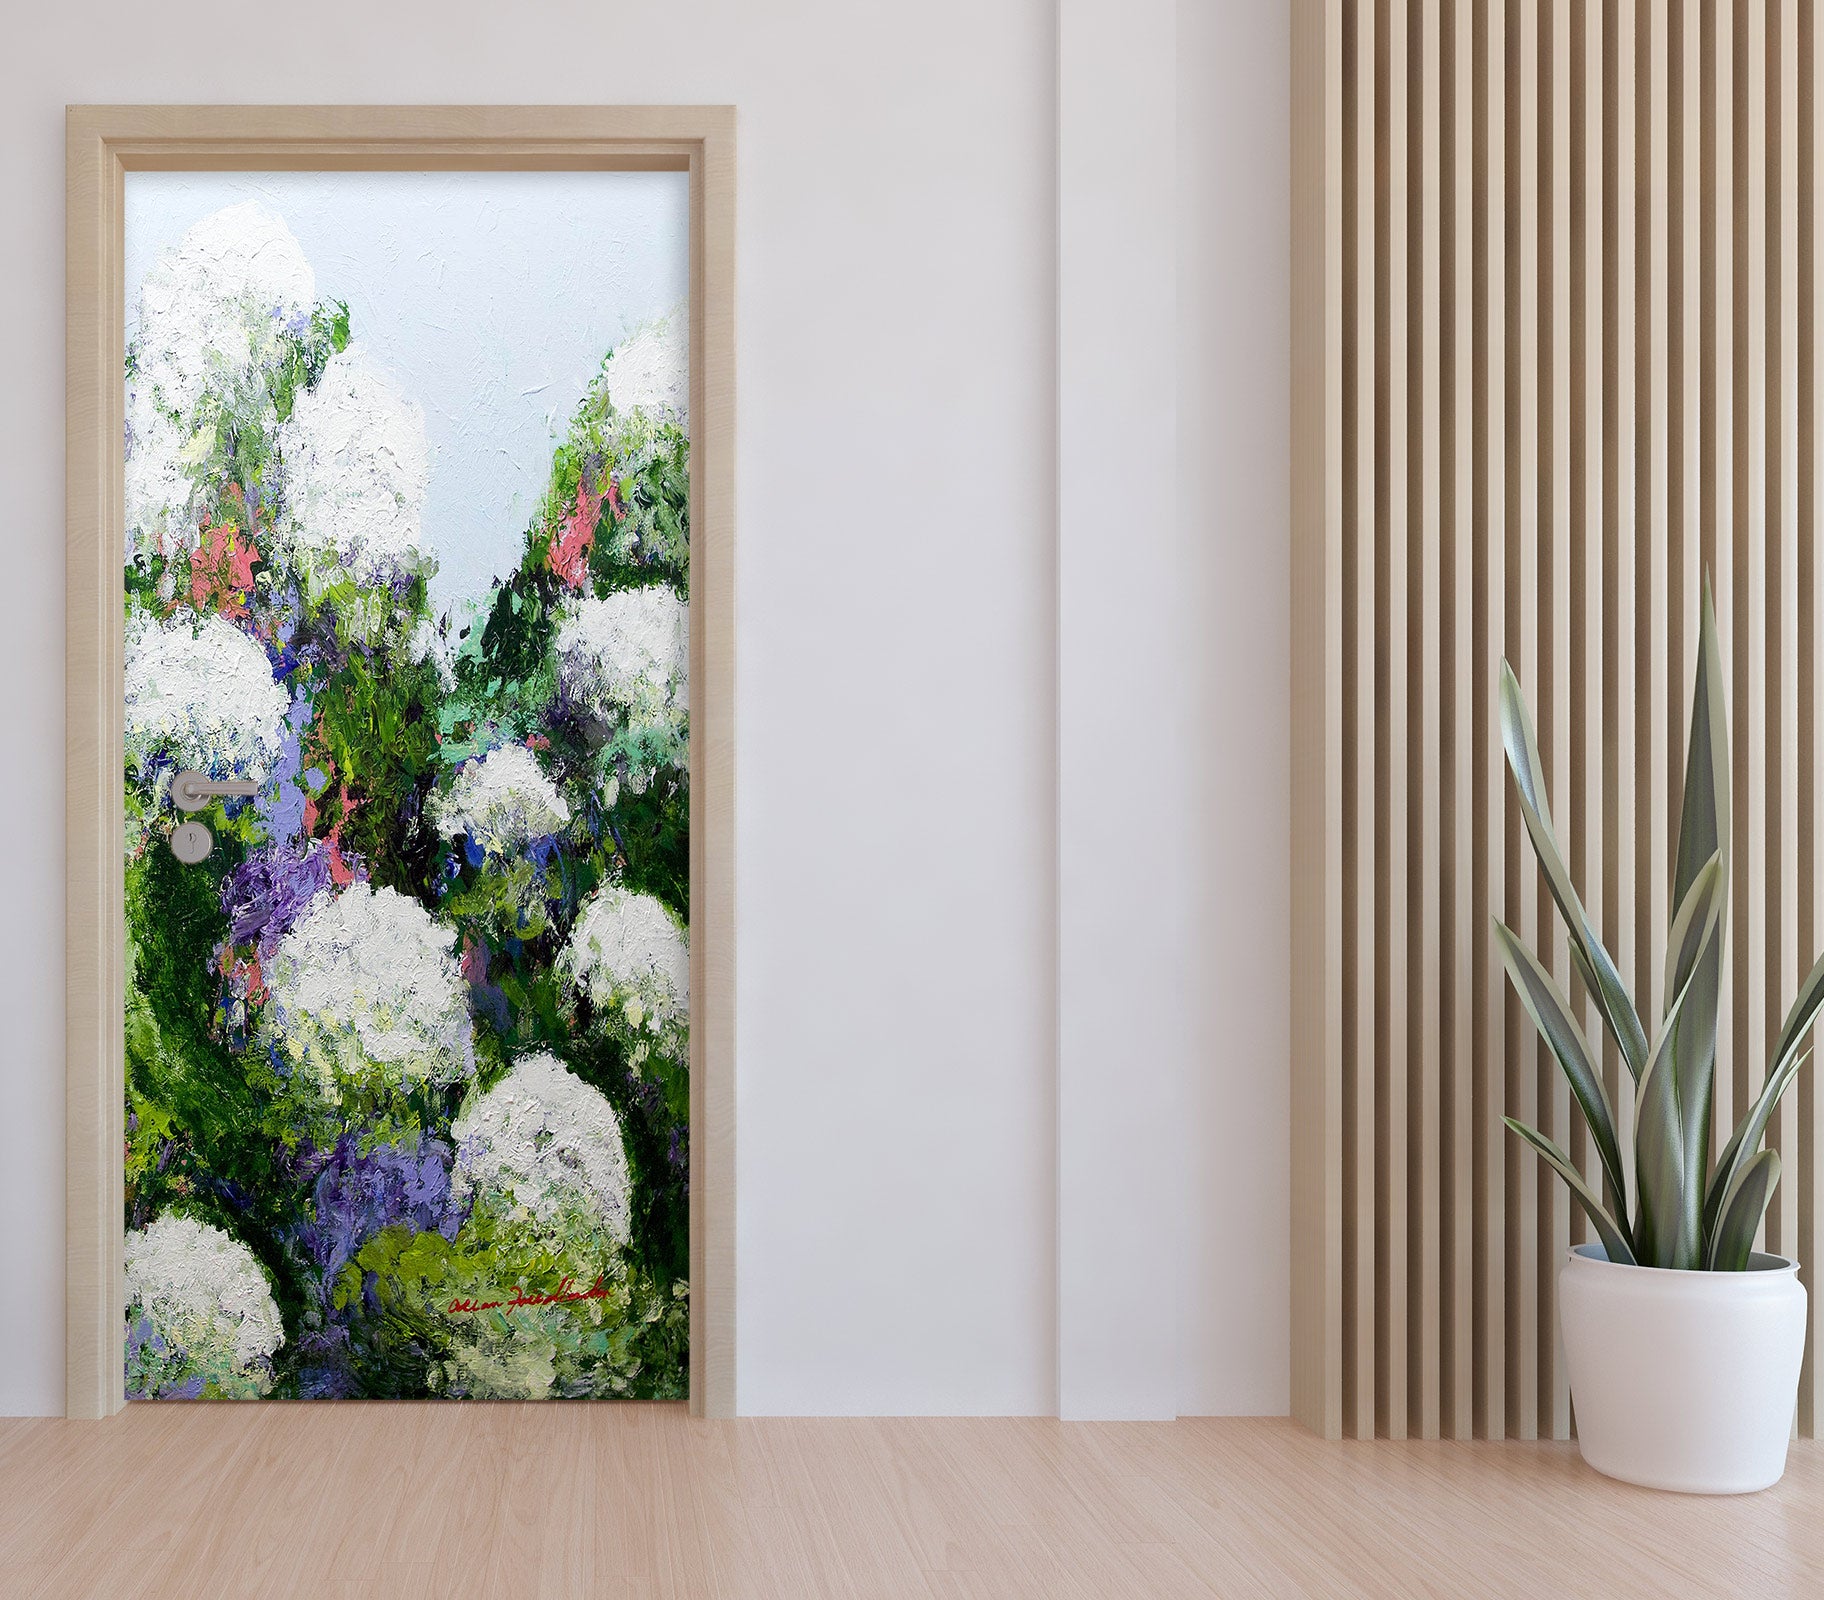 3D Painting White Flowers 93209 Allan P. Friedlander Door Mural